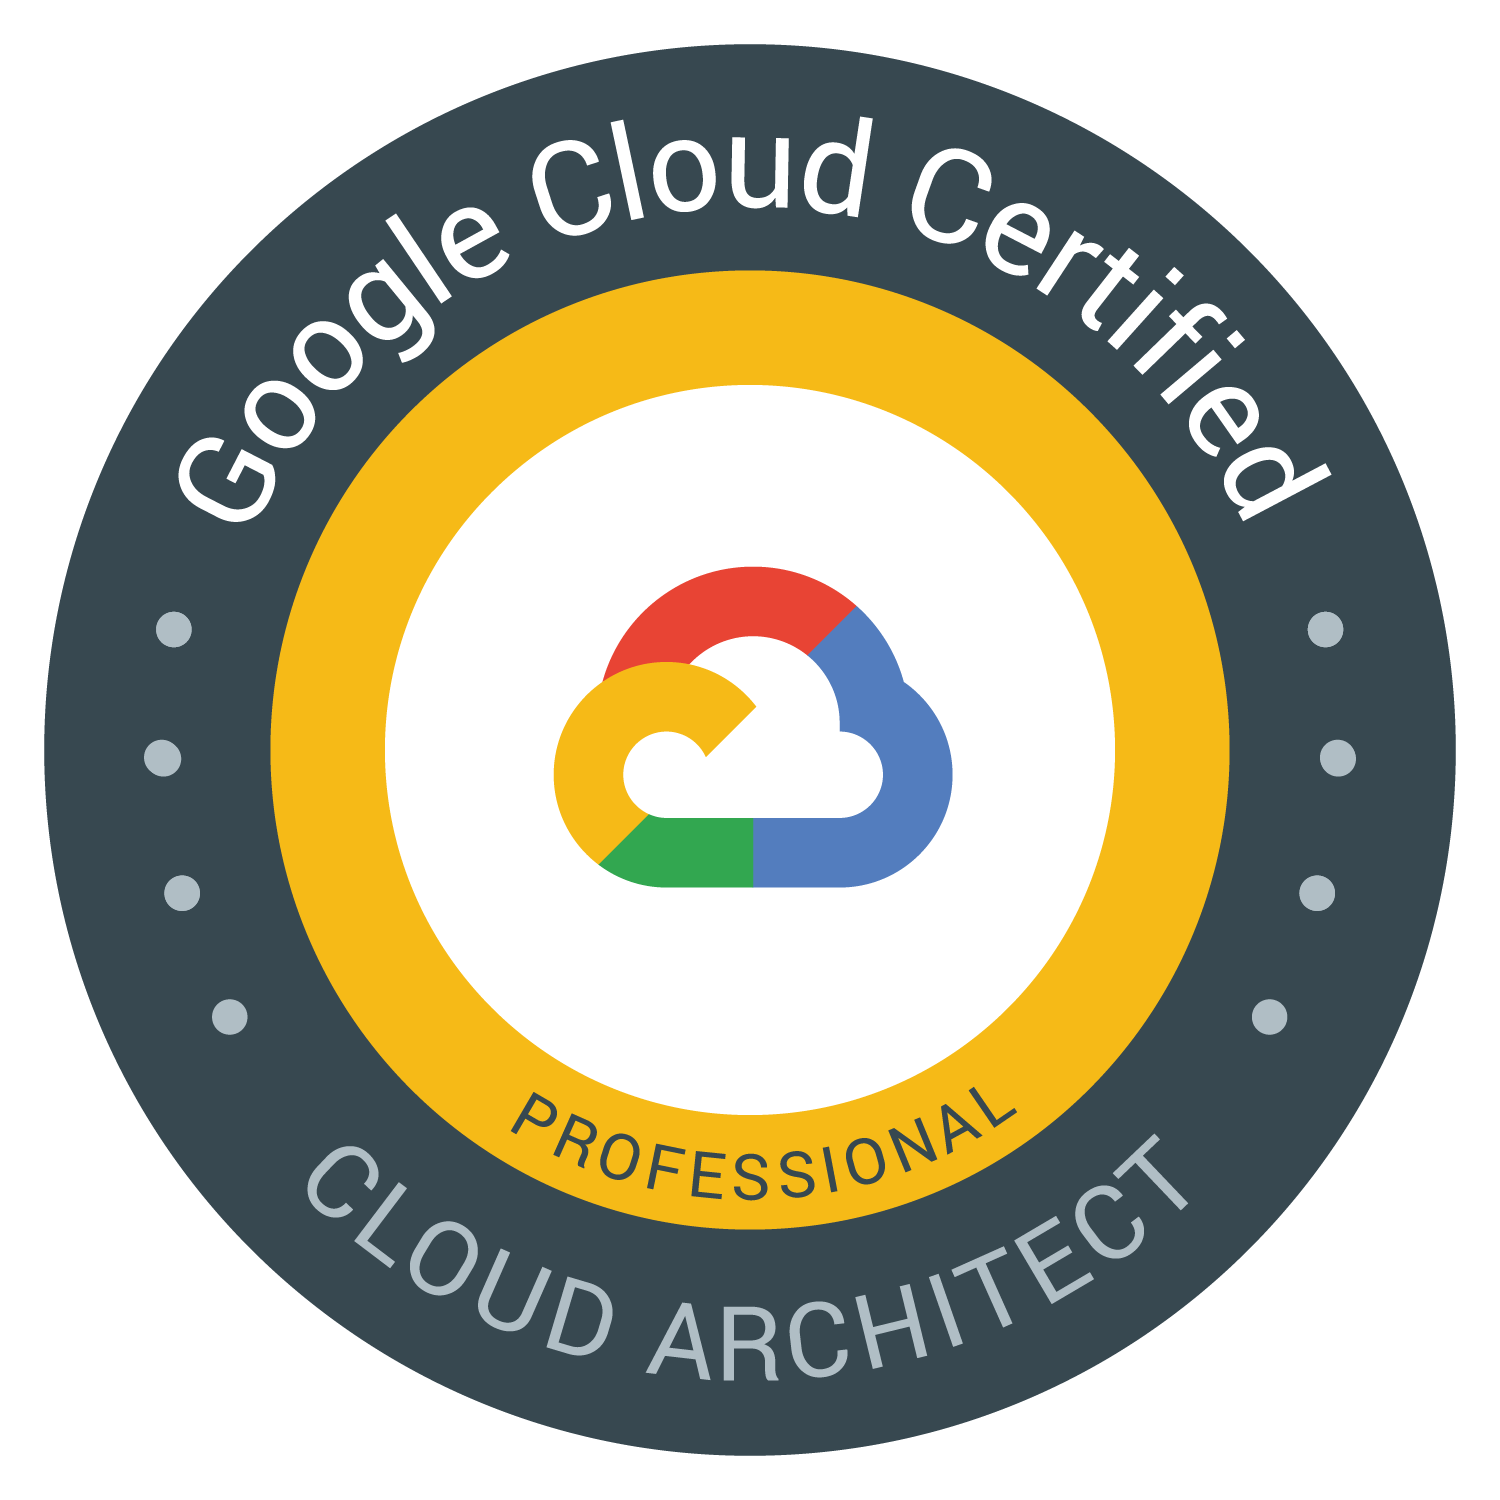 Google Cloud認定資格professional Cloud Architectを受験した話 Gmoアドパートナーズグループ Tech Blog Bygmo